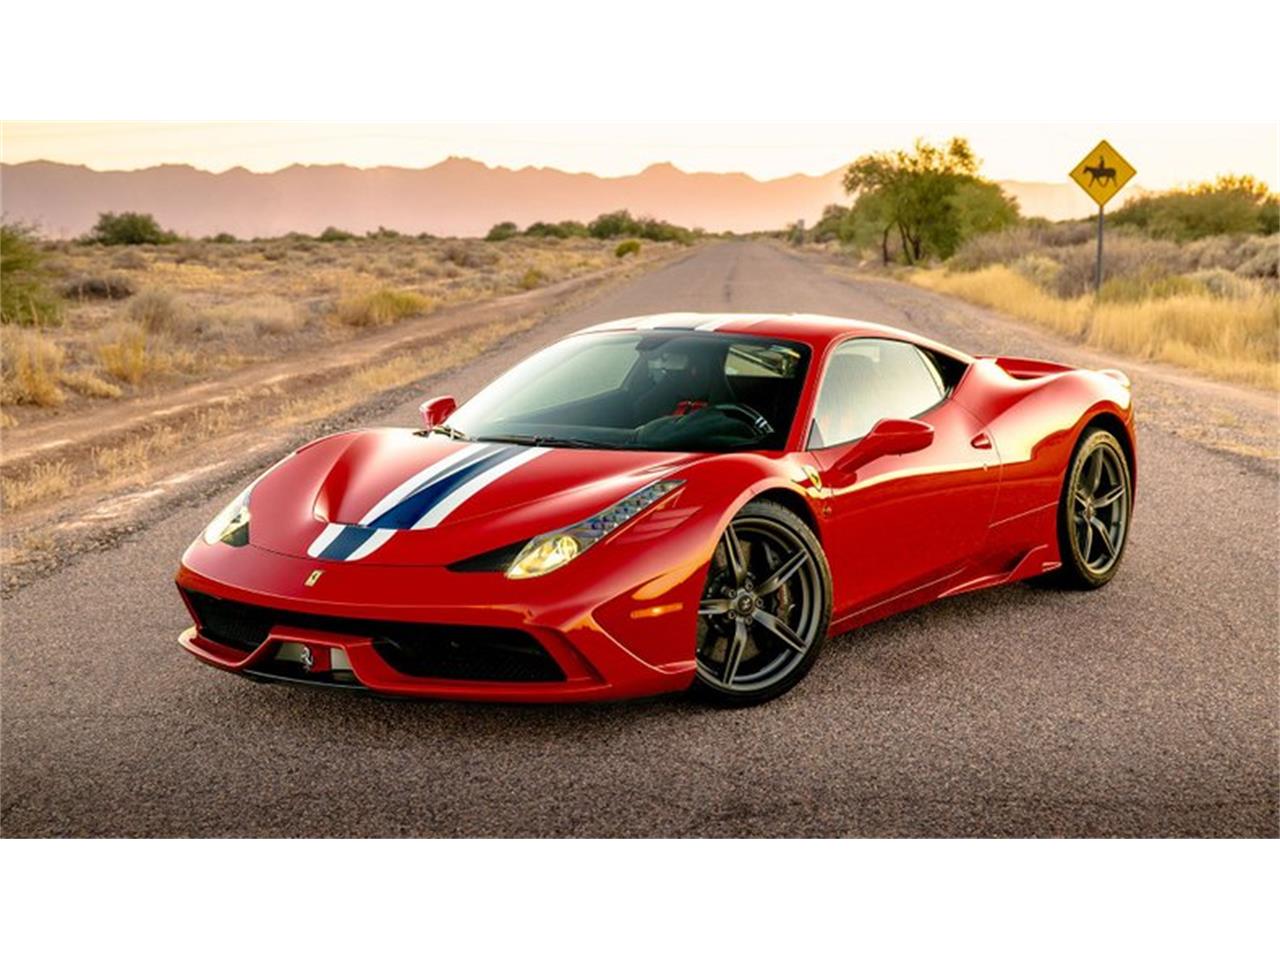 For Sale at Auction: 2015 Ferrari 458 in Monterey, California for sale in Monterey, CA